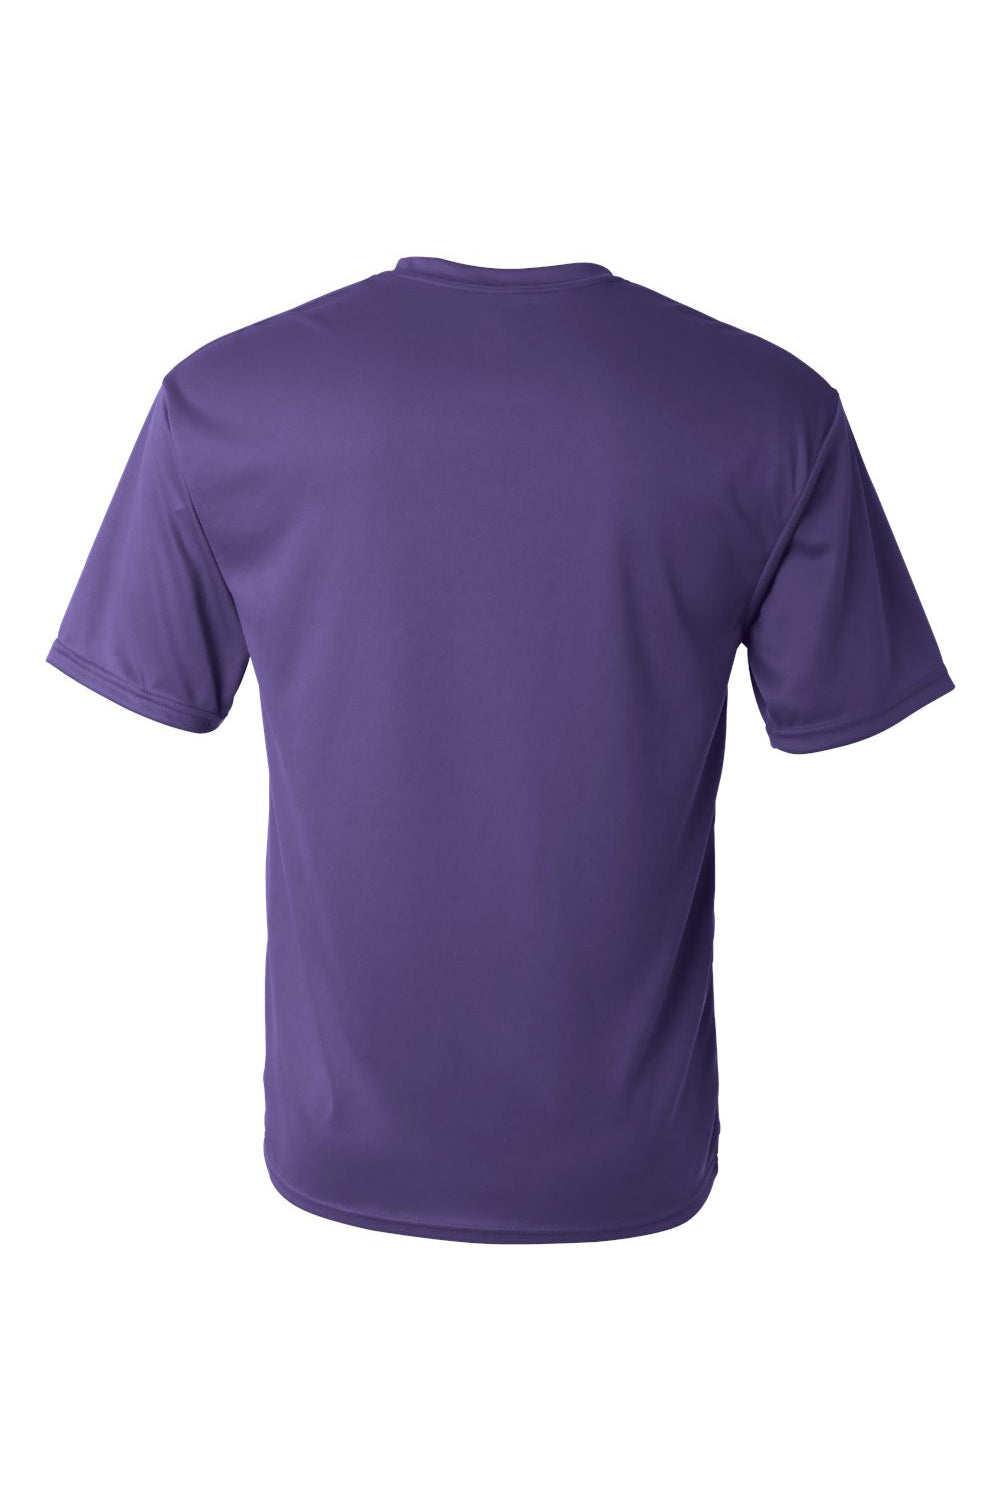 C2 Sport 5100 Mens Performance Moisture Wicking Short Sleeve Crewneck T-Shirt Purple Flat Back